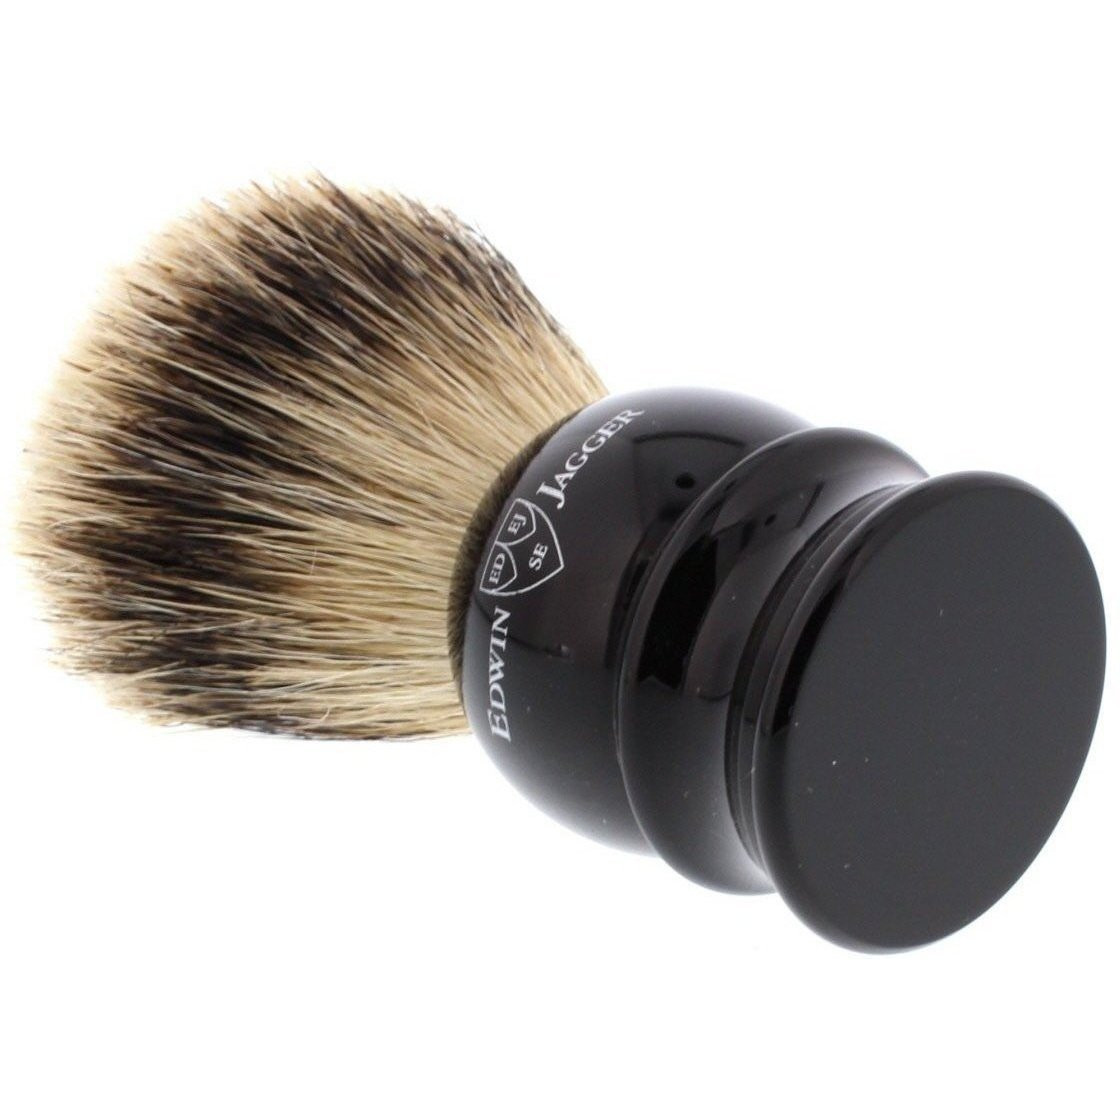 Product image 3 for Edwin Jagger Silver Tip Badger Shaving Brush, Medium, Black